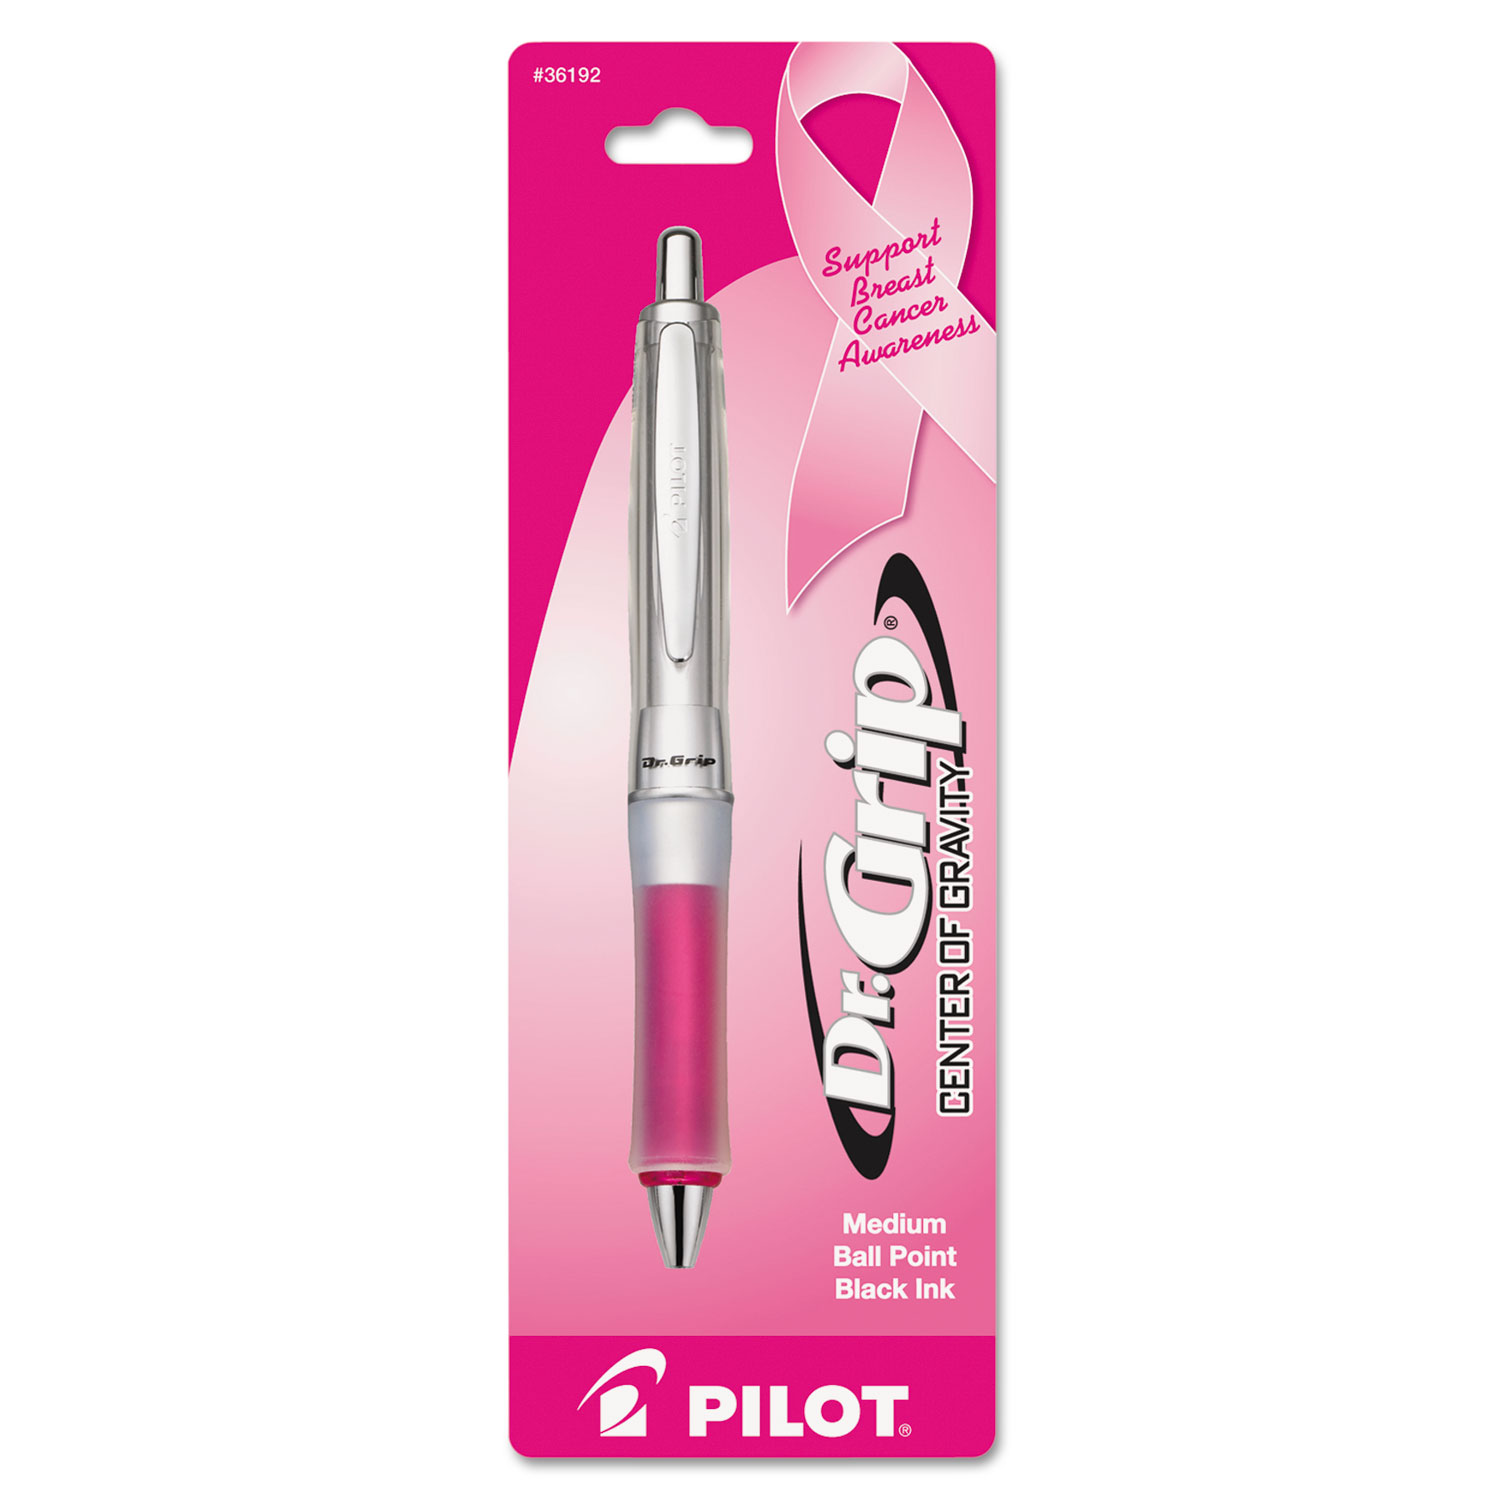  Pilot 36192 Dr. Grip Center of Gravity Retractable Ballpoint Pen, 1mm, Black Ink, Silver/Pink Barrel (PIL36192) 